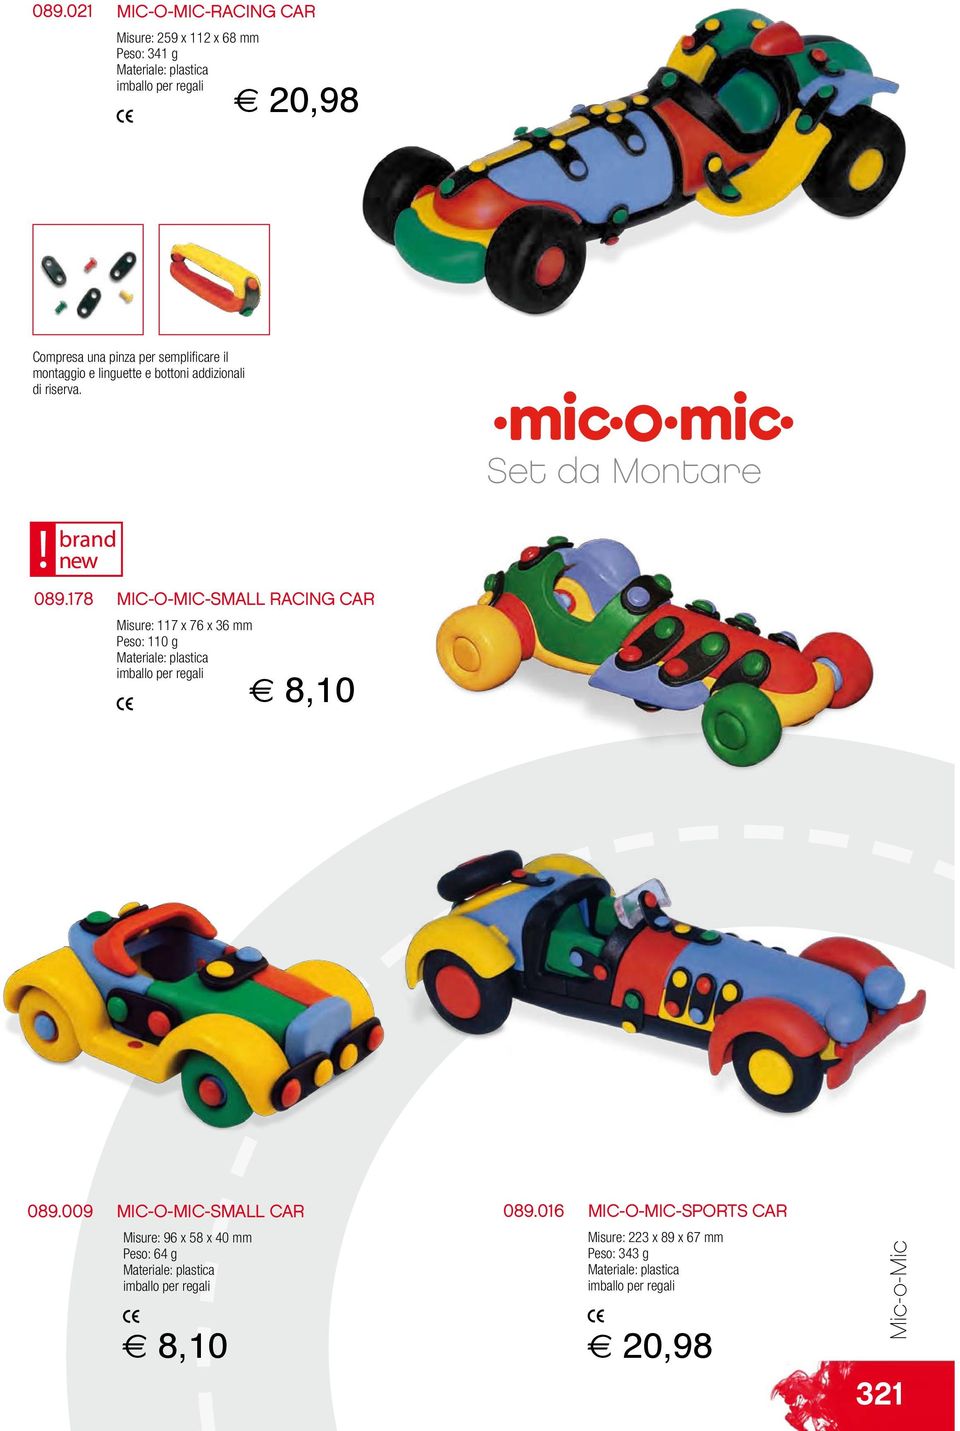 178 MIC-O-MIC-SMALL RACING CAR Misure: 117 x 76 x 36 mm Peso: 110 g 8,10 089.